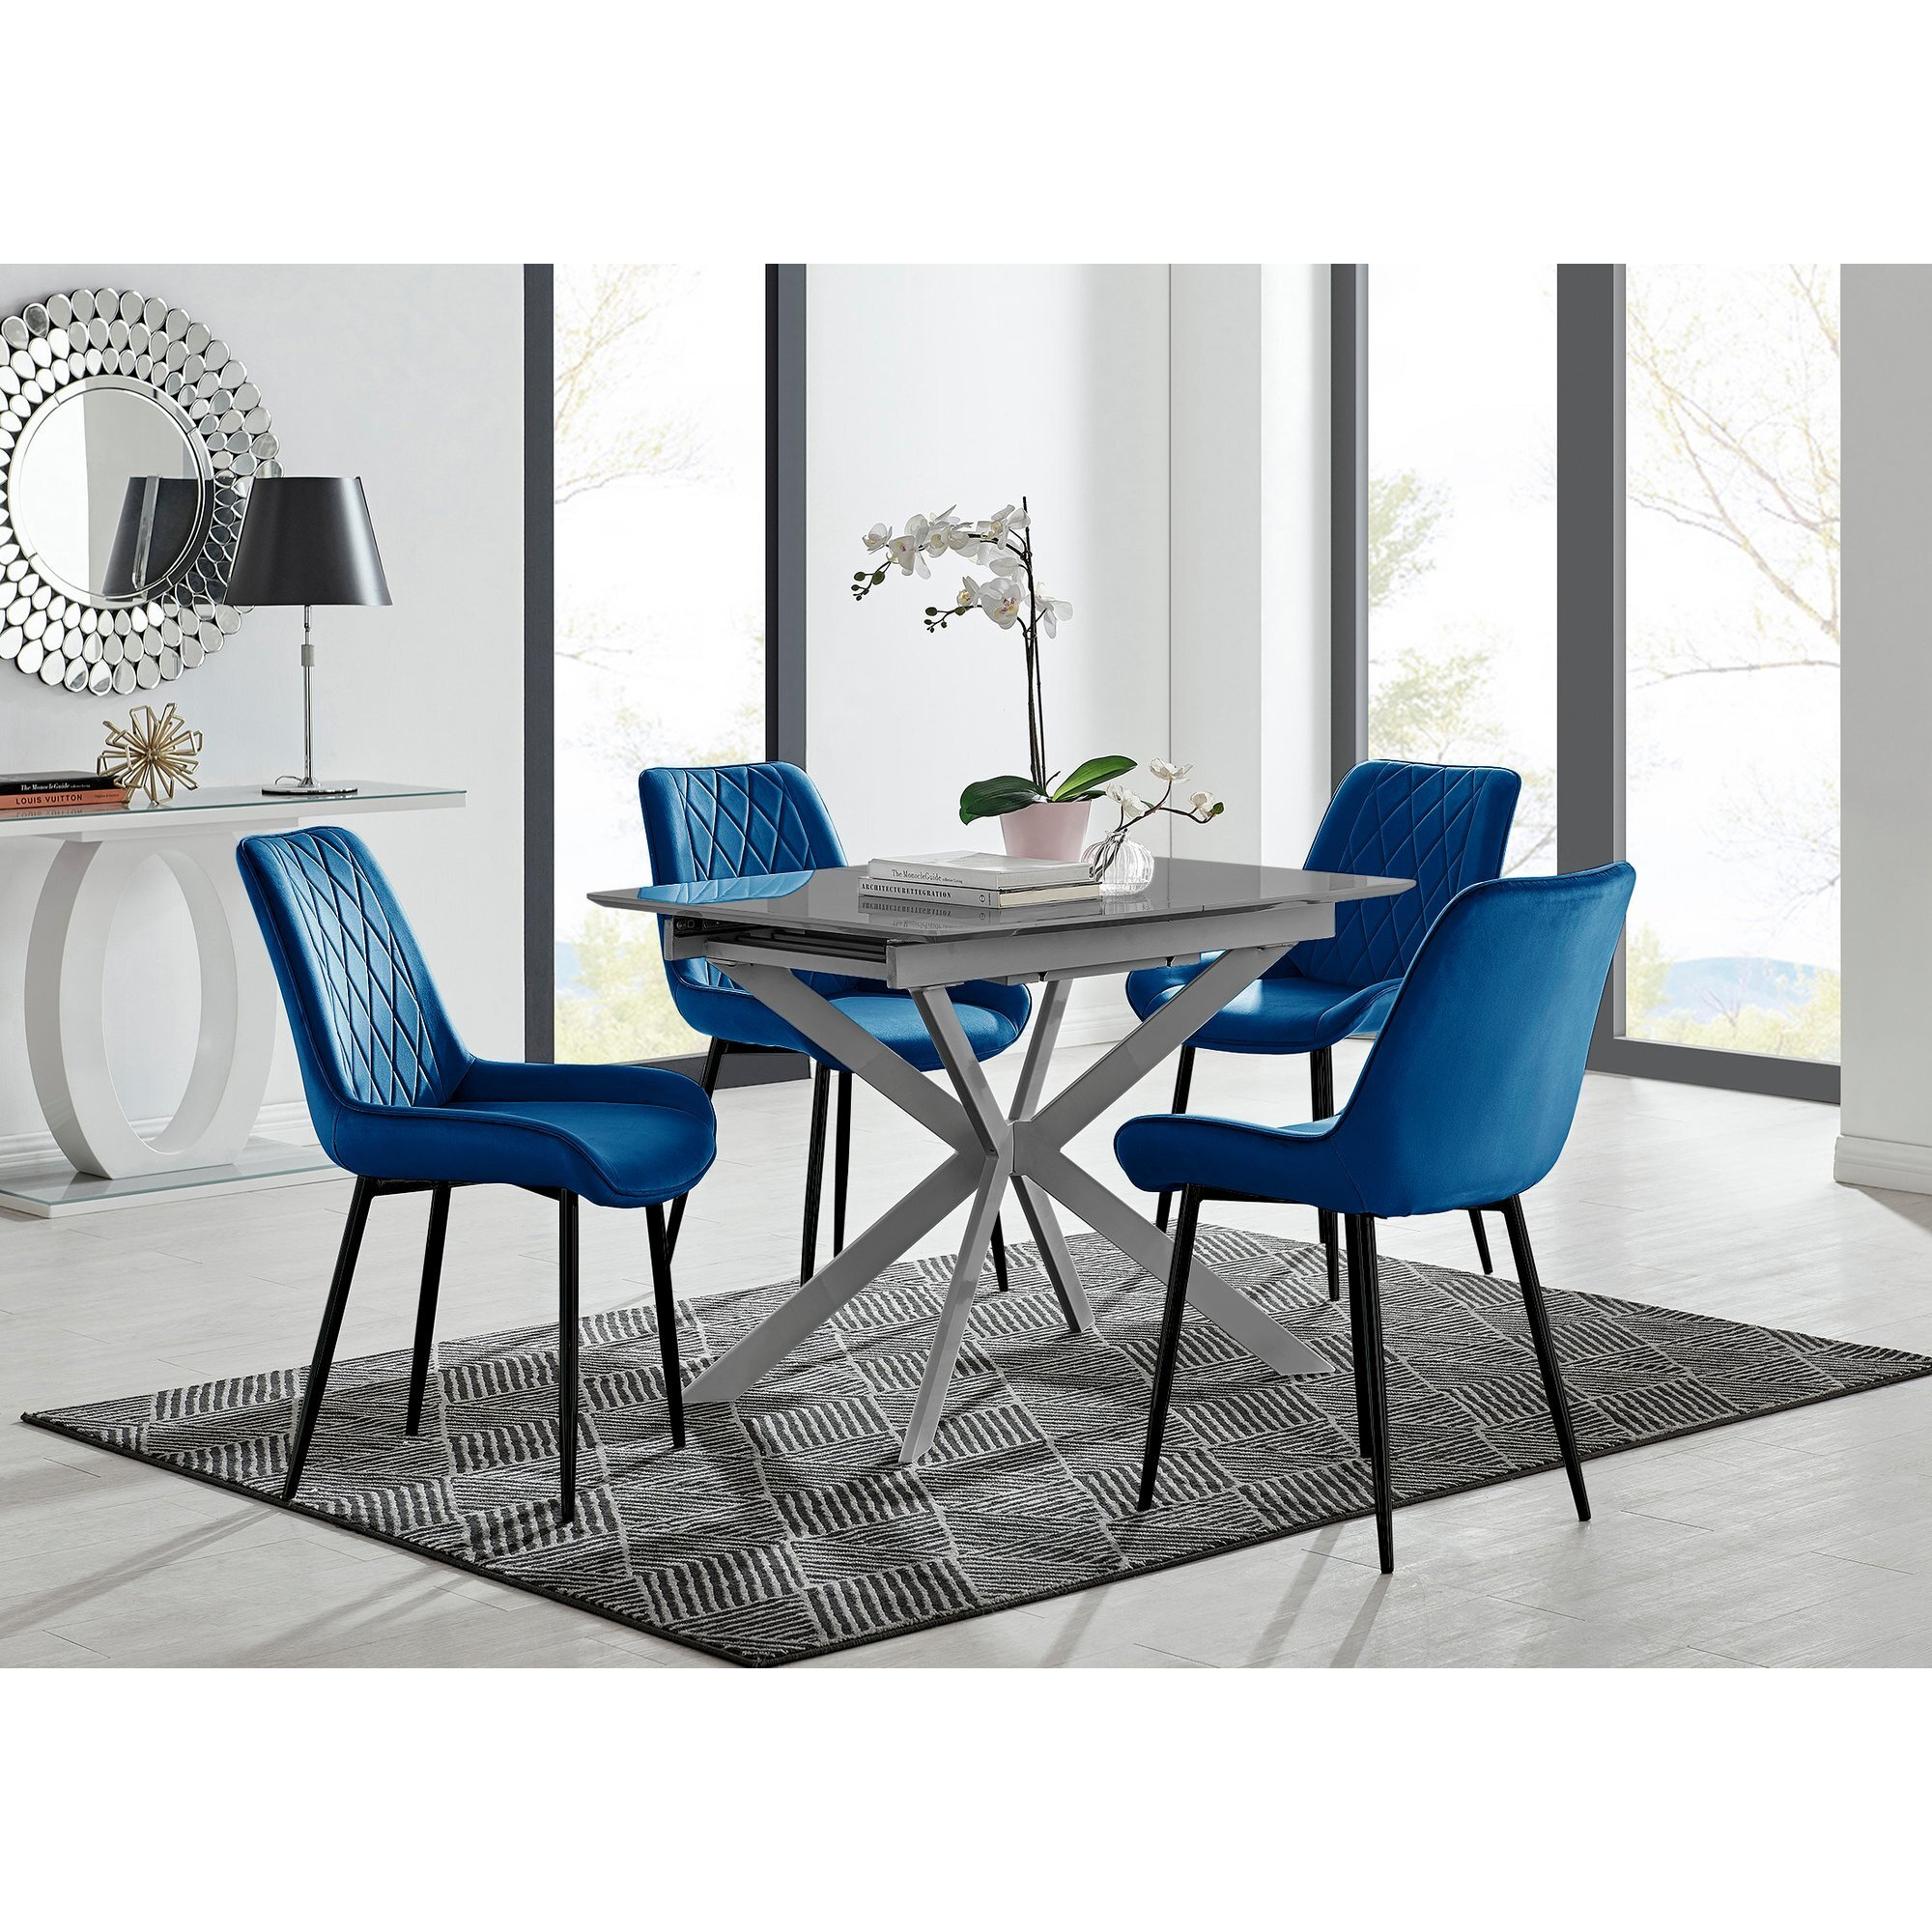 Lira 120cm Grey Metal Extending Dining Table & 4 Pesaro Black Leg Chairs